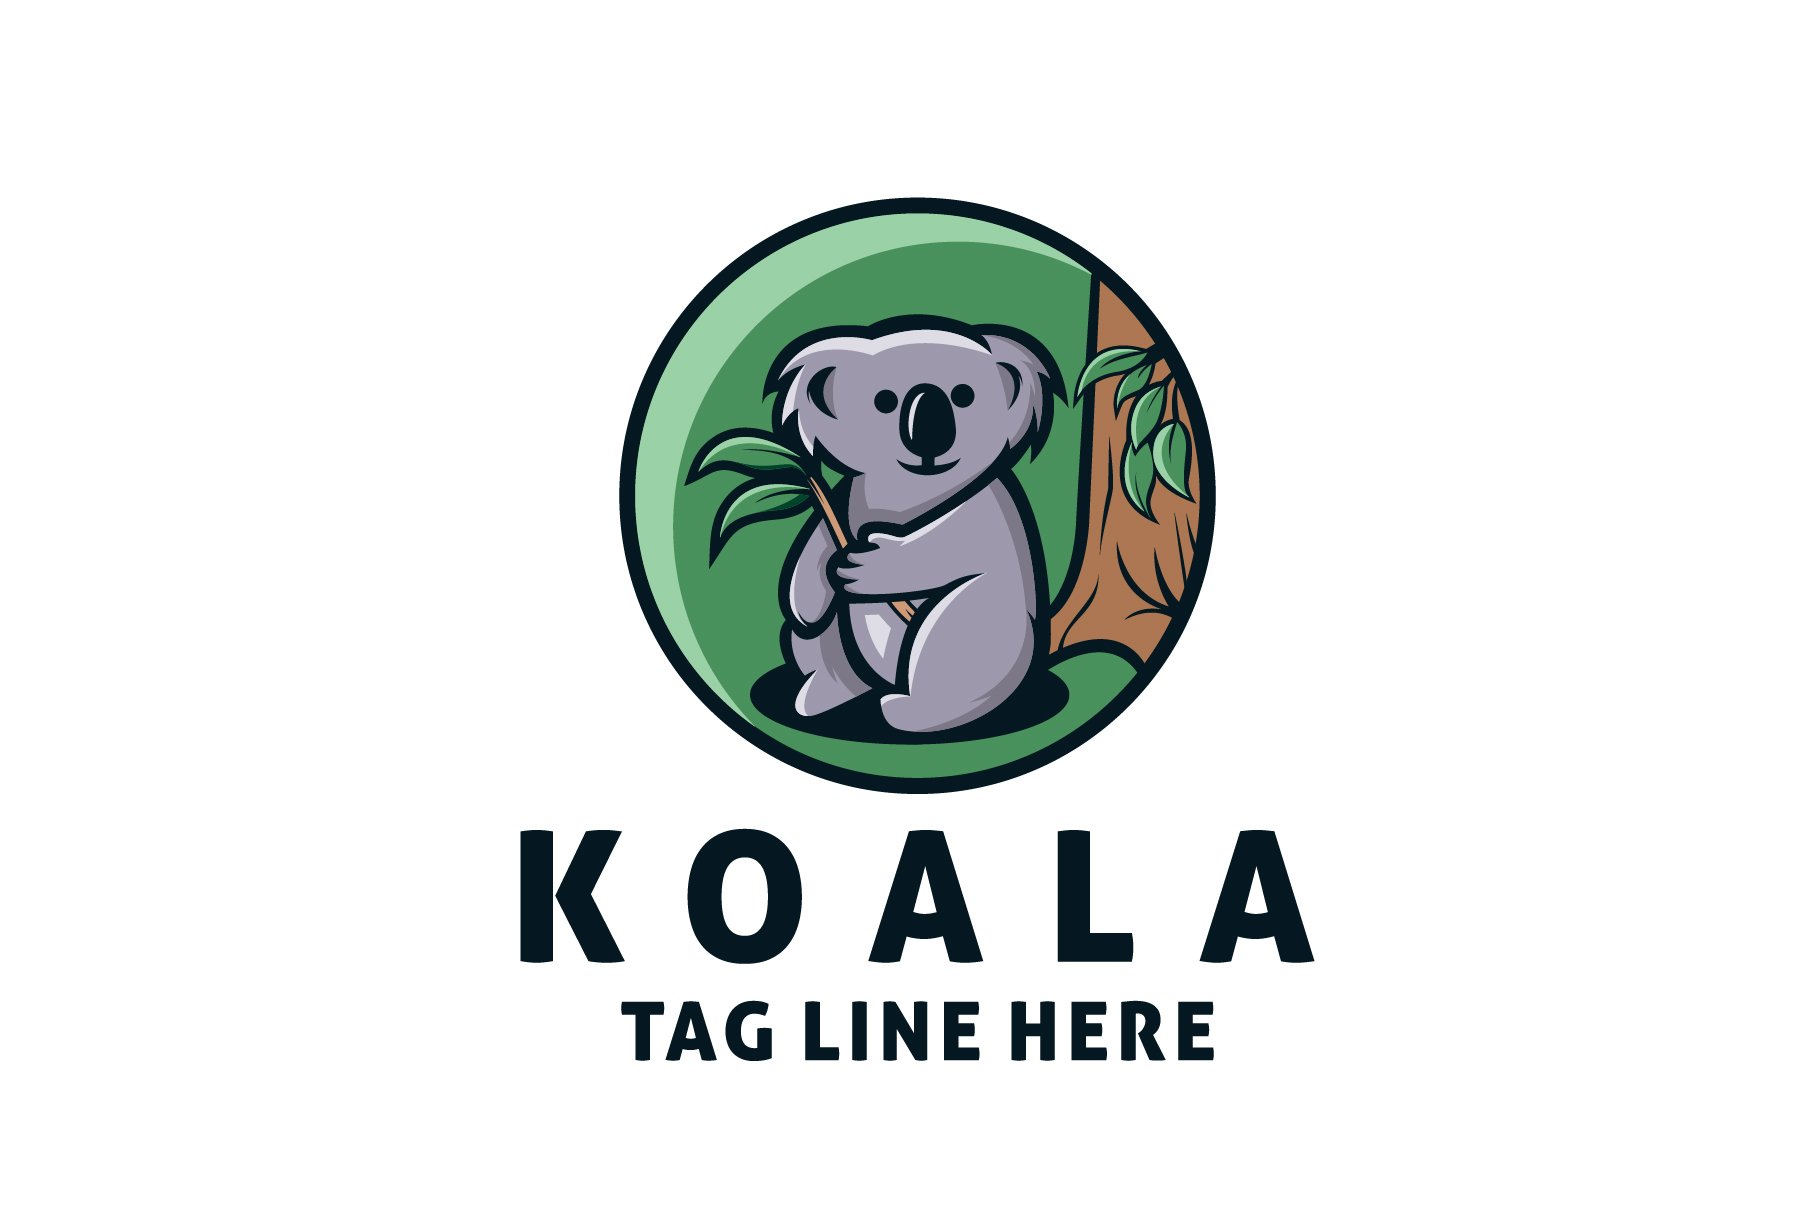 cute koala logo design template cover image.